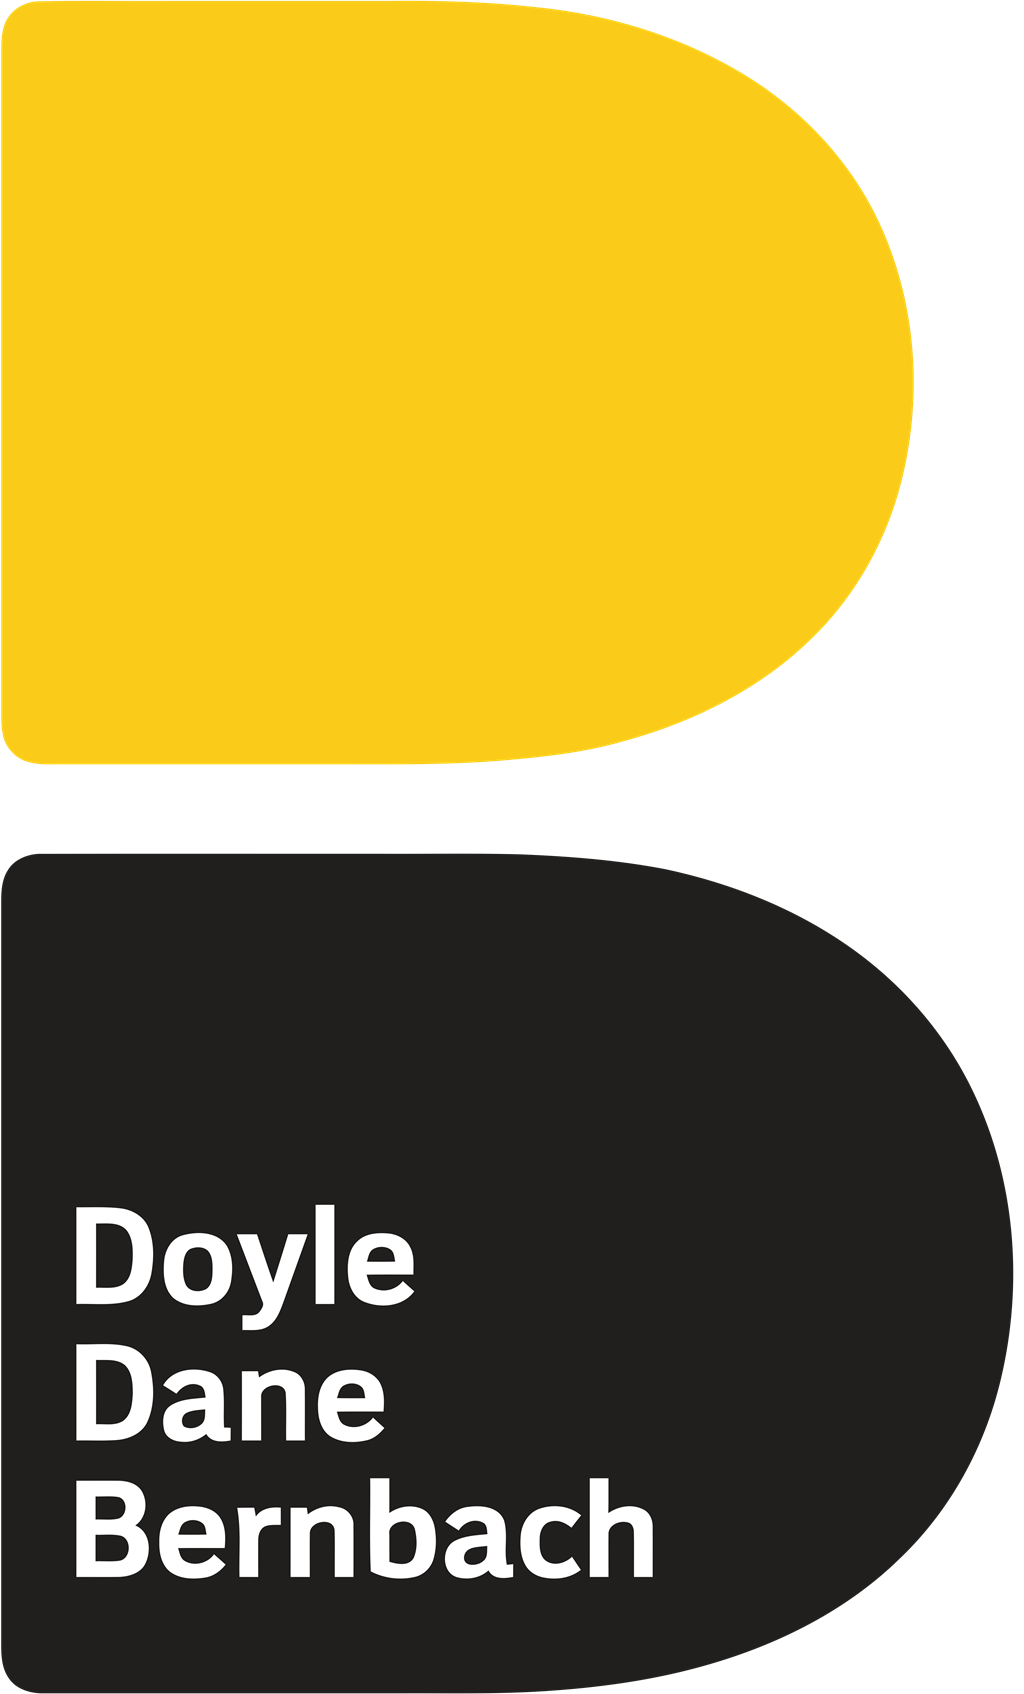 Doyle Dane Bernbach logotype, transparent .png, medium, large